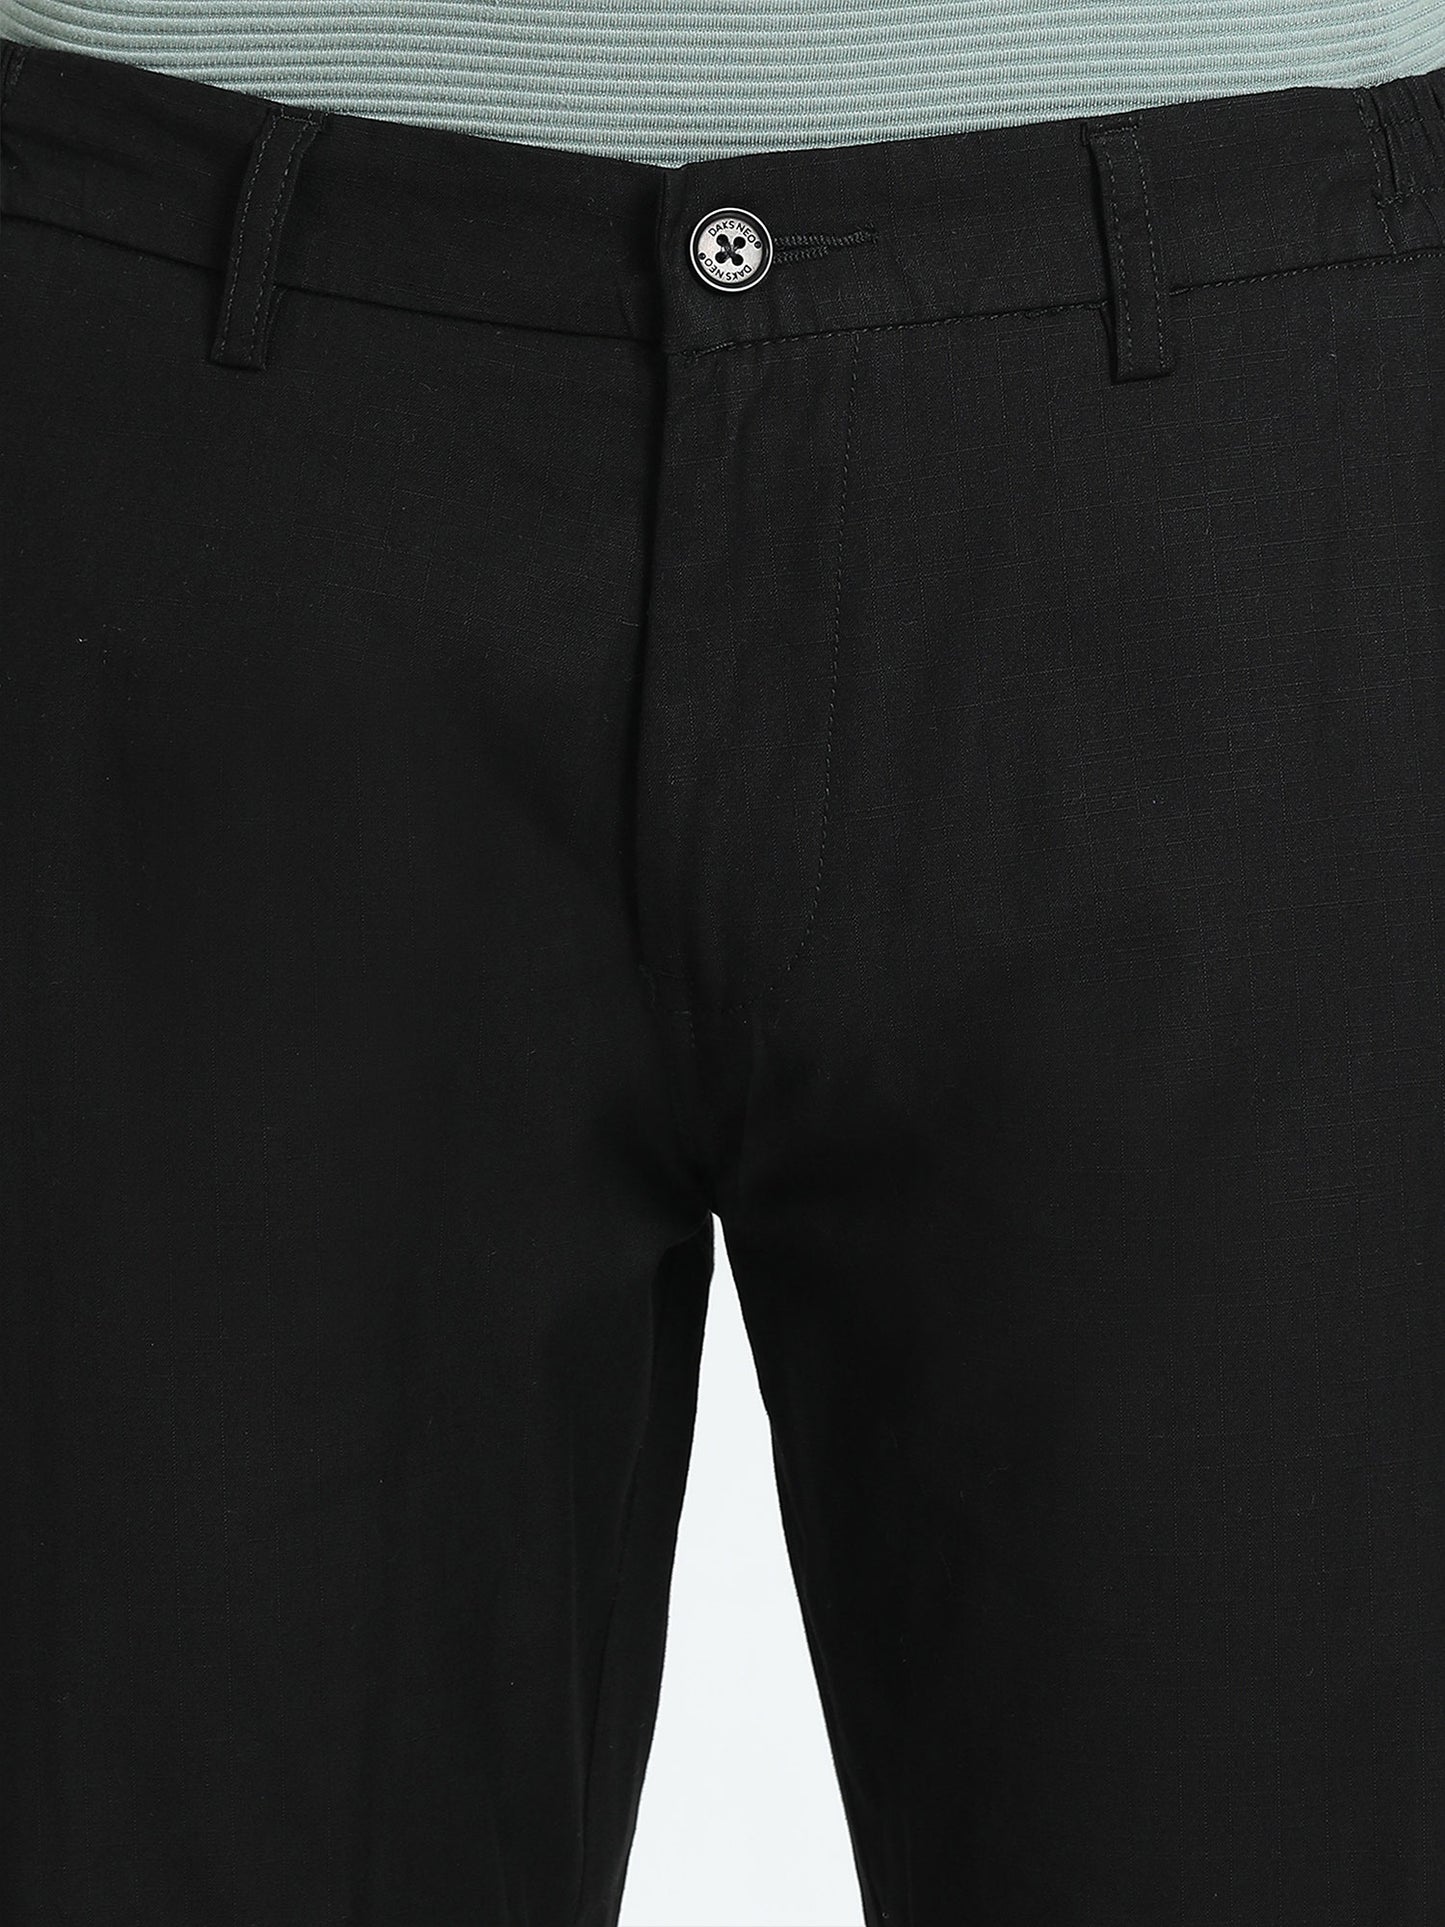 Deep Black Slim Fit Trouser for Men